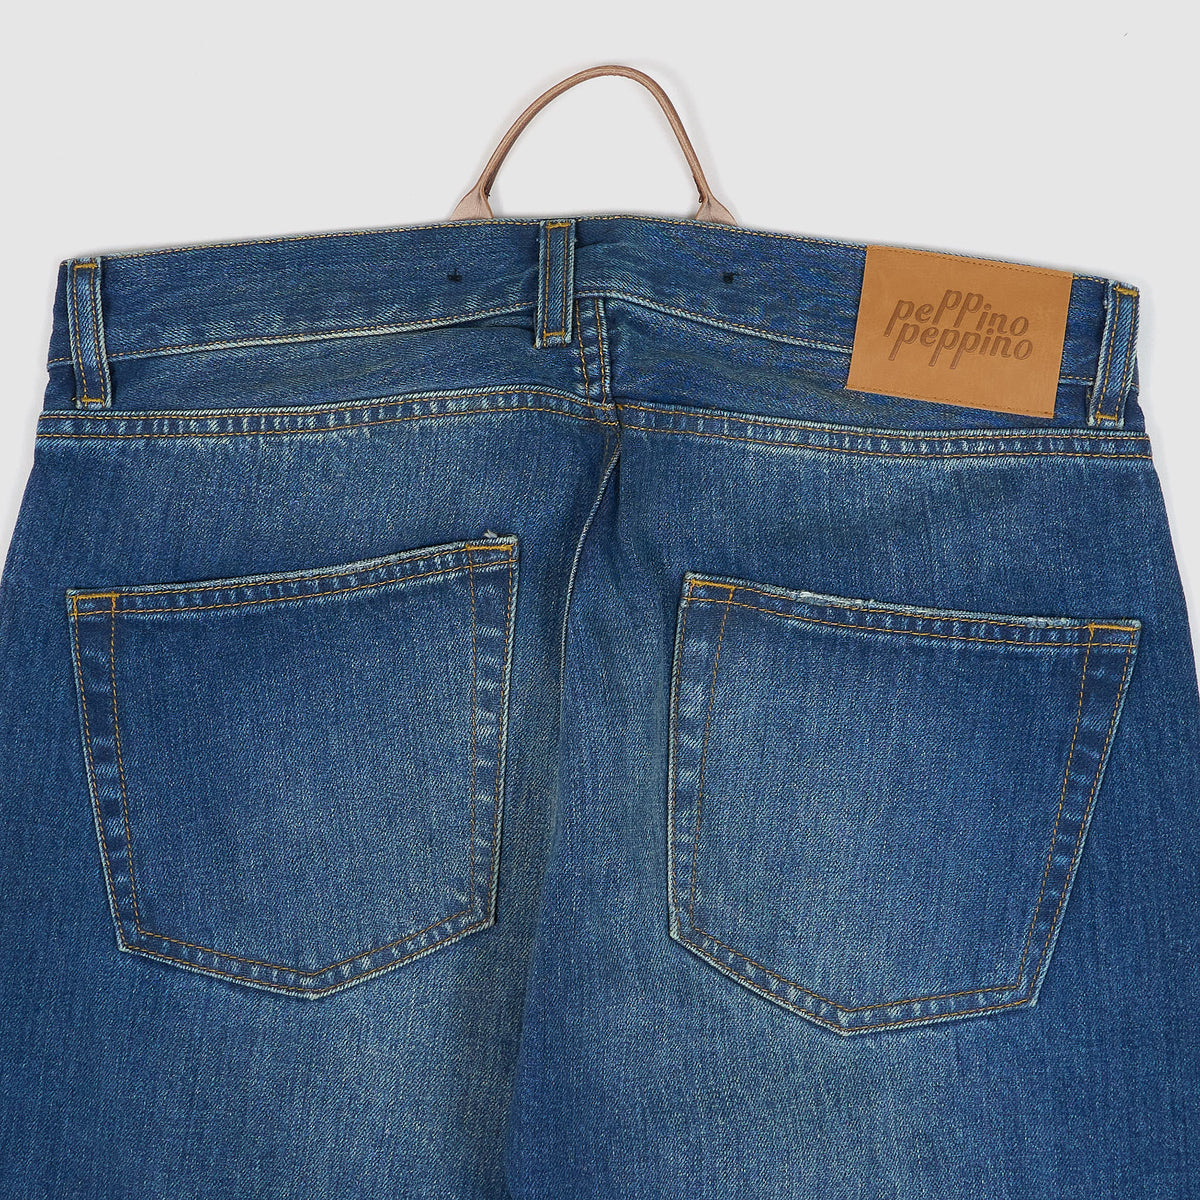 Peppino Peppino Ladies 5-Pocket Selvedge Jeans